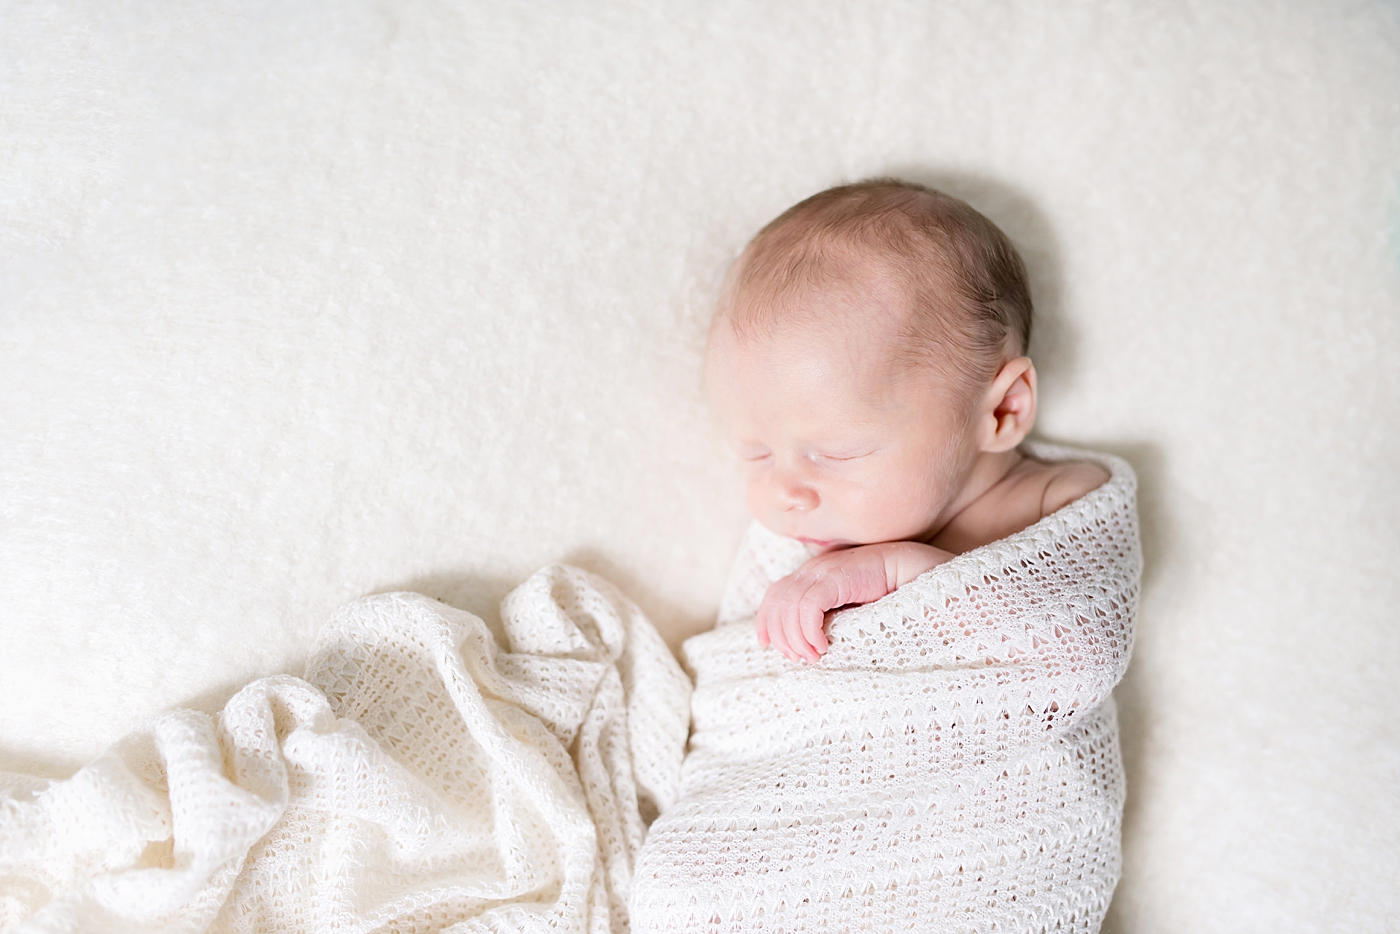 Newborn baby boy wrapped in white swaddle | Photo by Anna Wisjo